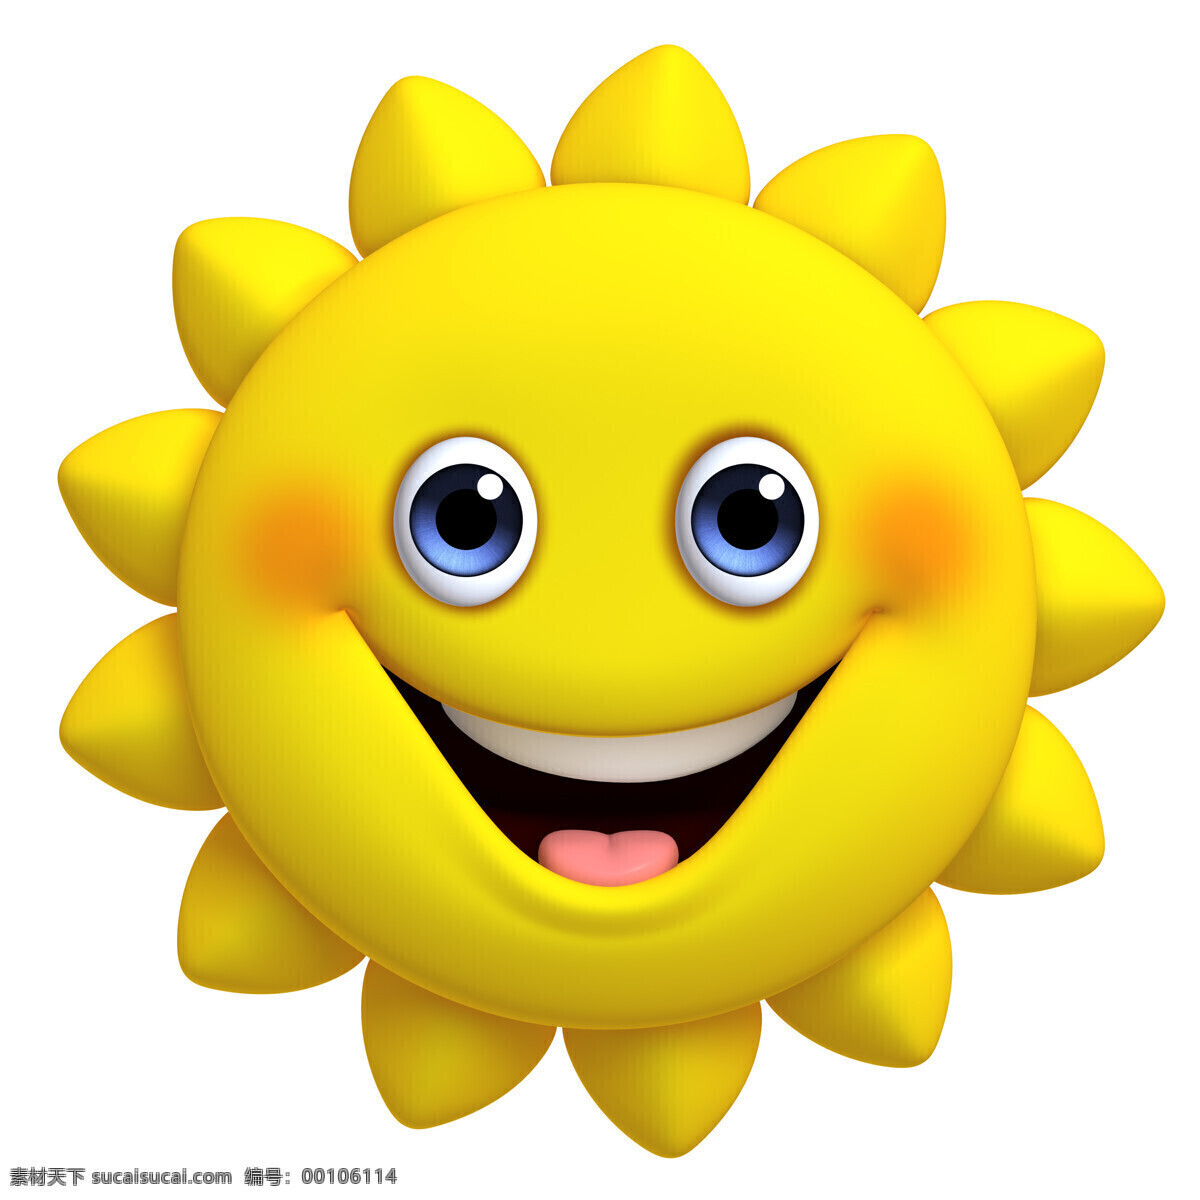 3d 卡通 太阳 3d太阳 卡通太阳 立体太阳 微笑的太阳 其他人物 人物图片